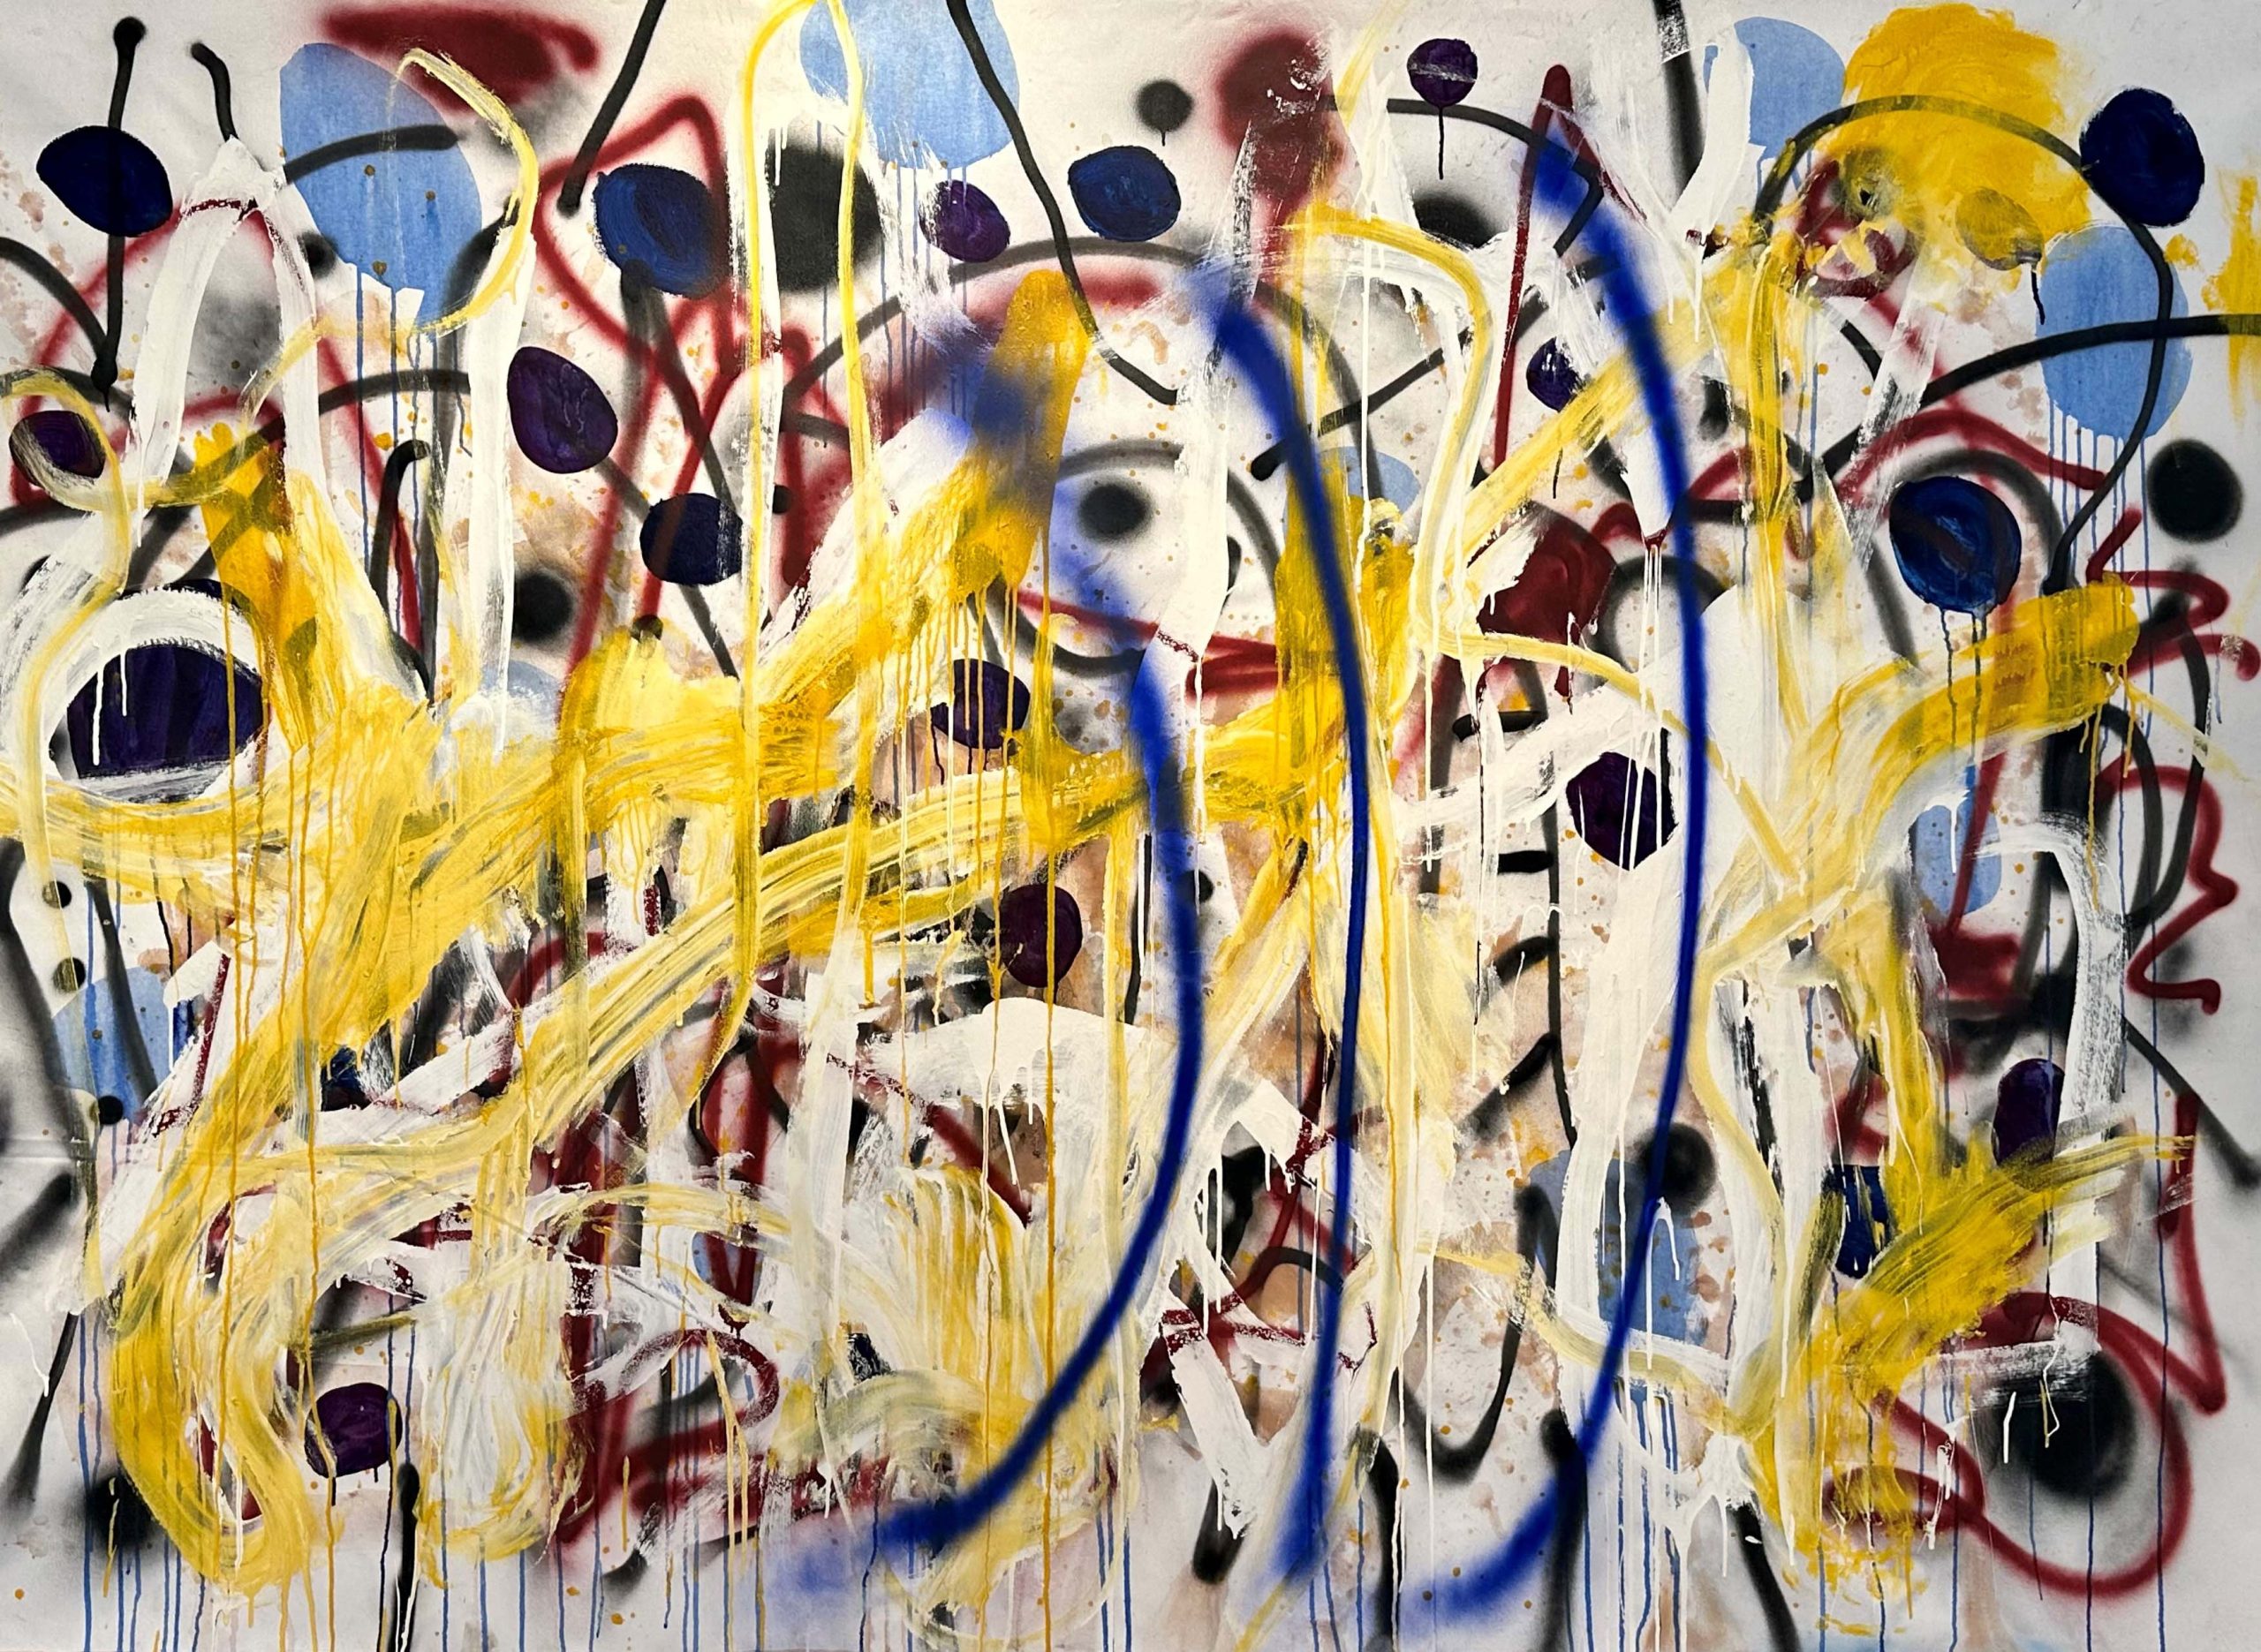 Al Poulet 'The Point' acrylic and spray paint on canvas 150 x 240cm